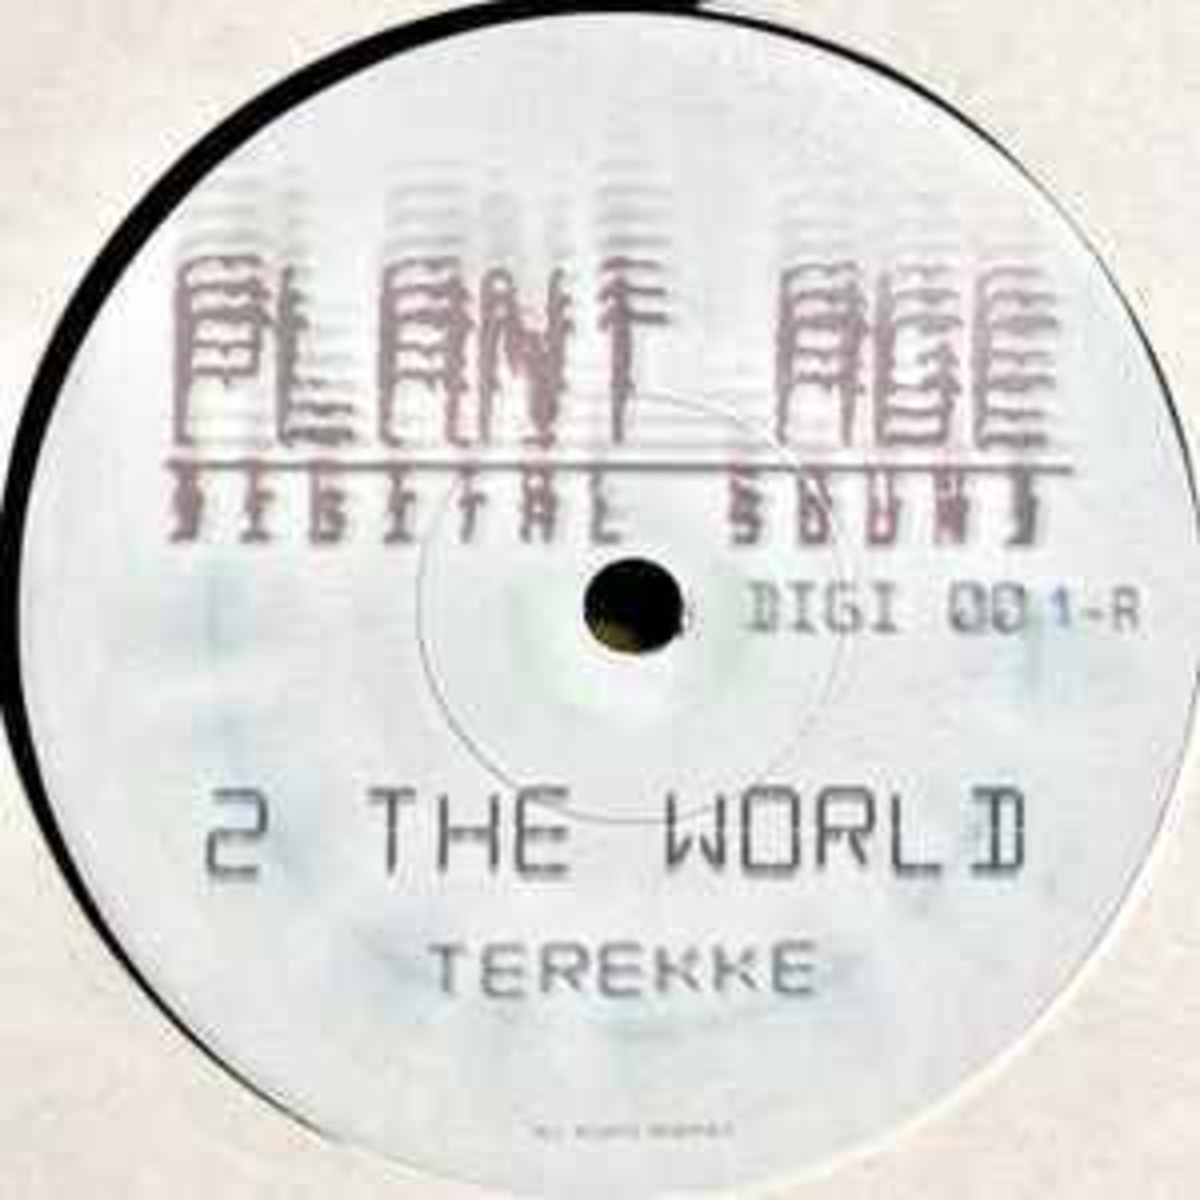 TEREKKE - 2 THE WORLD /FANDN "7'' | SAYAMA HOUSE